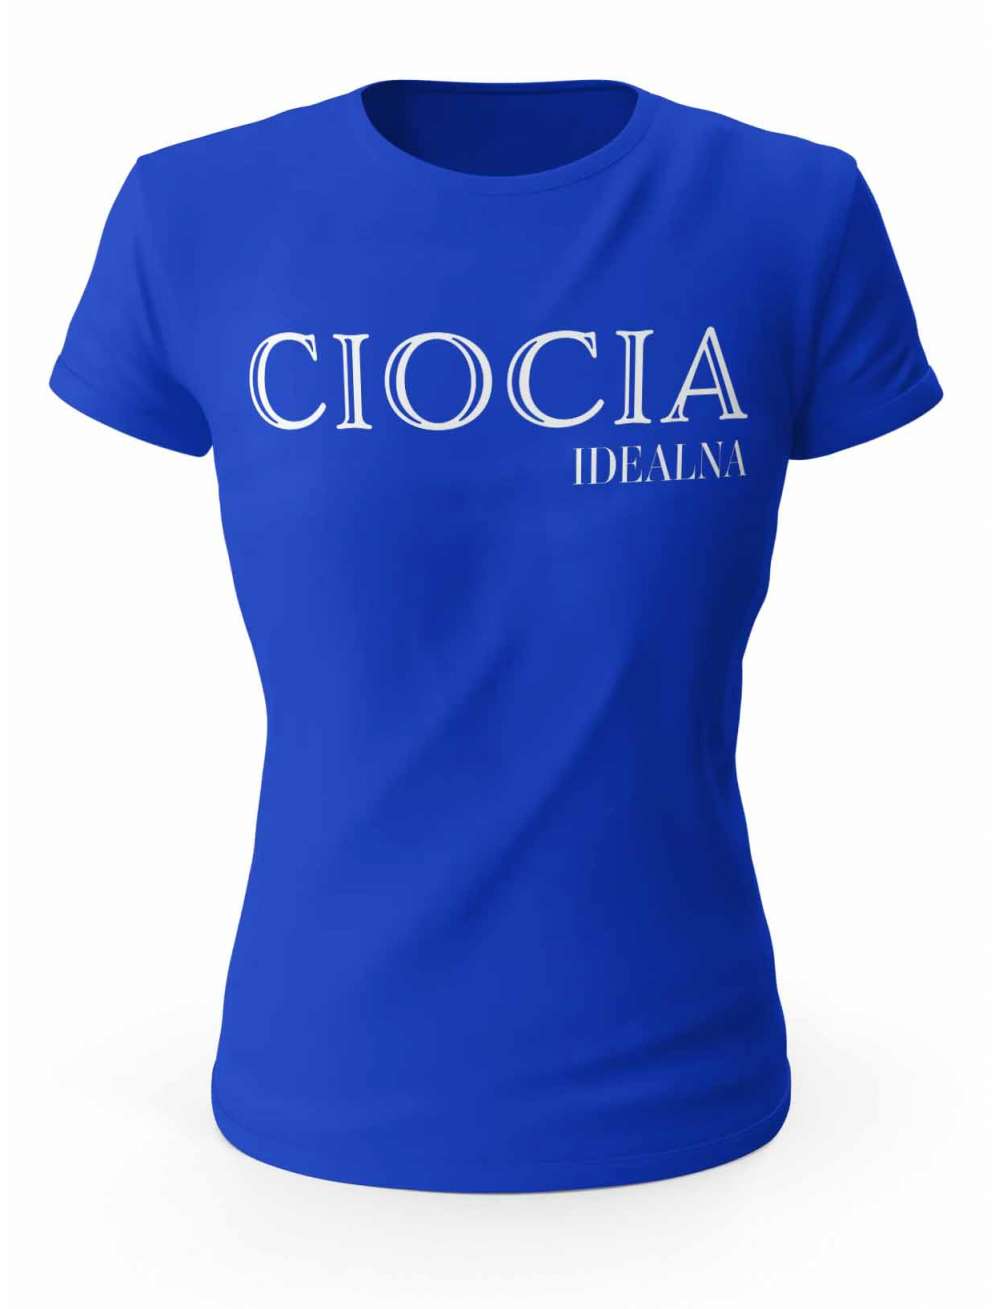 Koszulka Idealna Ciocia, T-shirt Dla Cioci